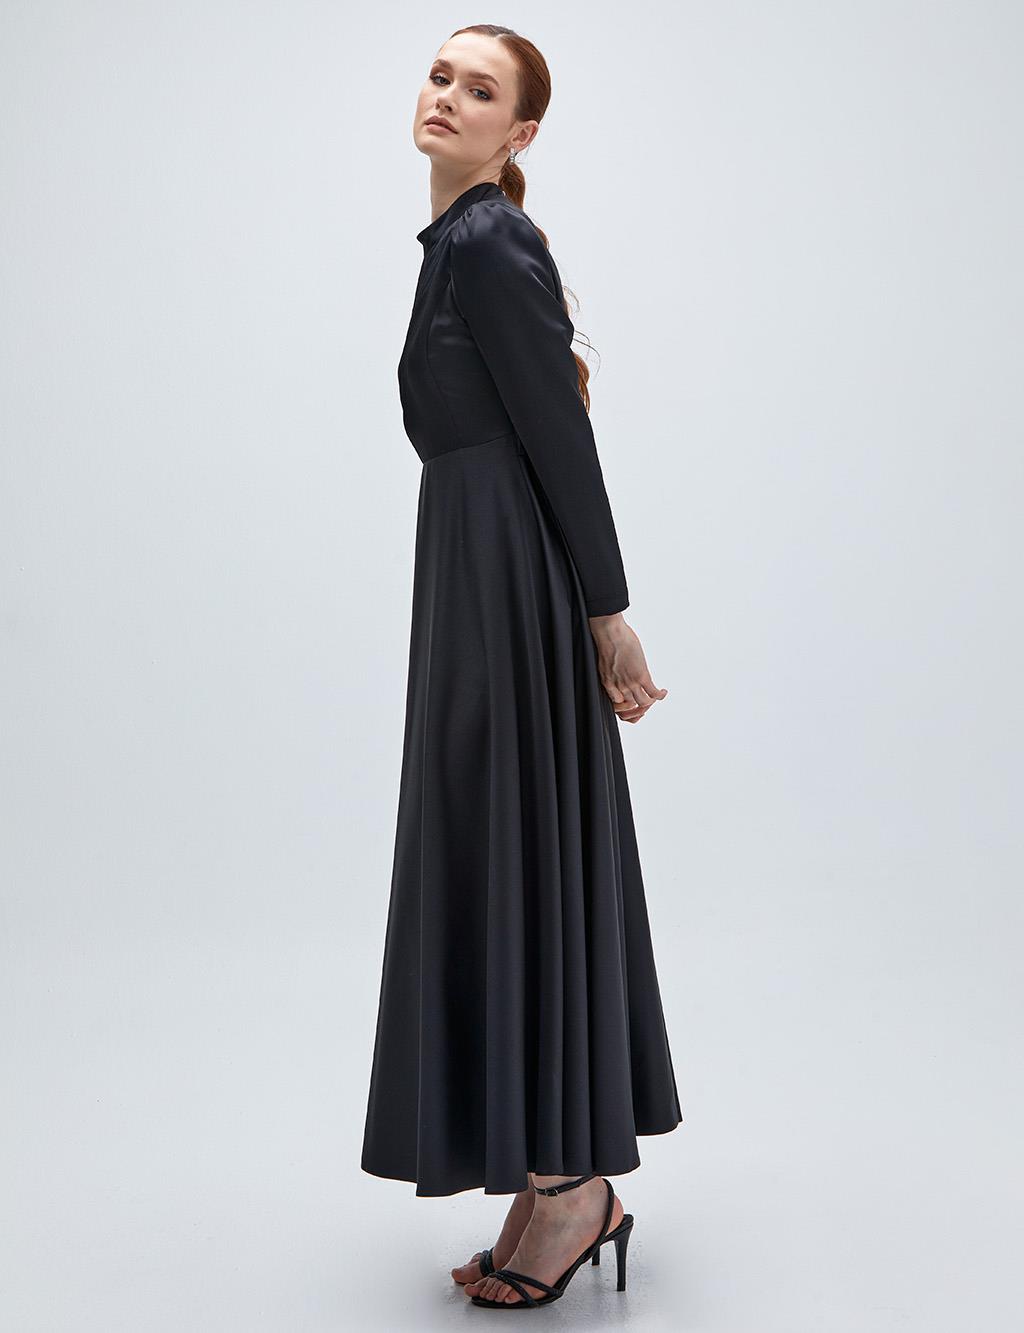 Black Collar Dress With Flowy Skirt Black